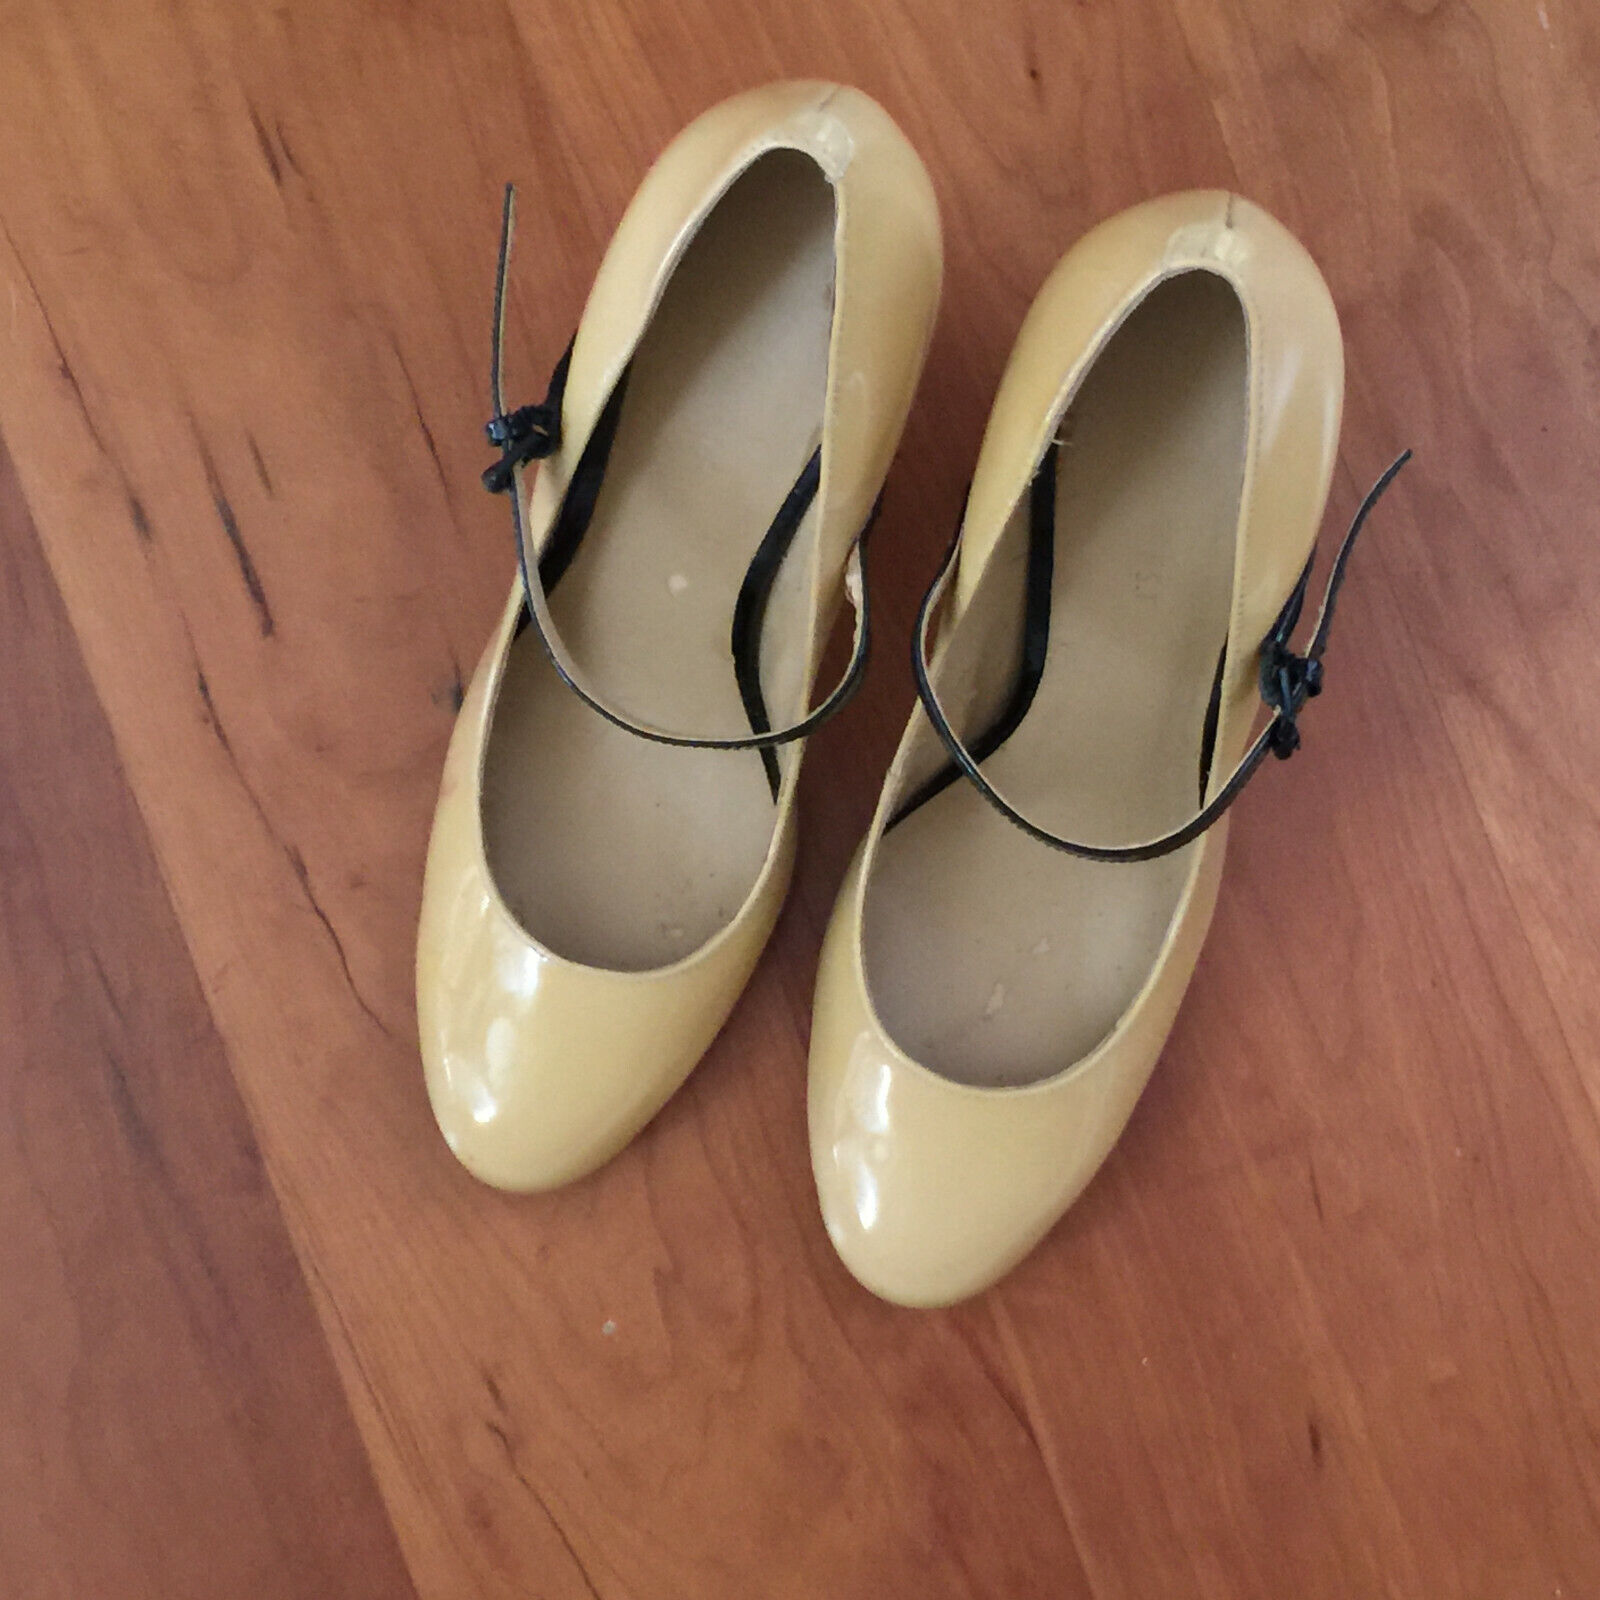 Nine West Patent Leather Strap Heels Shoes Color: Black / Cream Size: 7.5